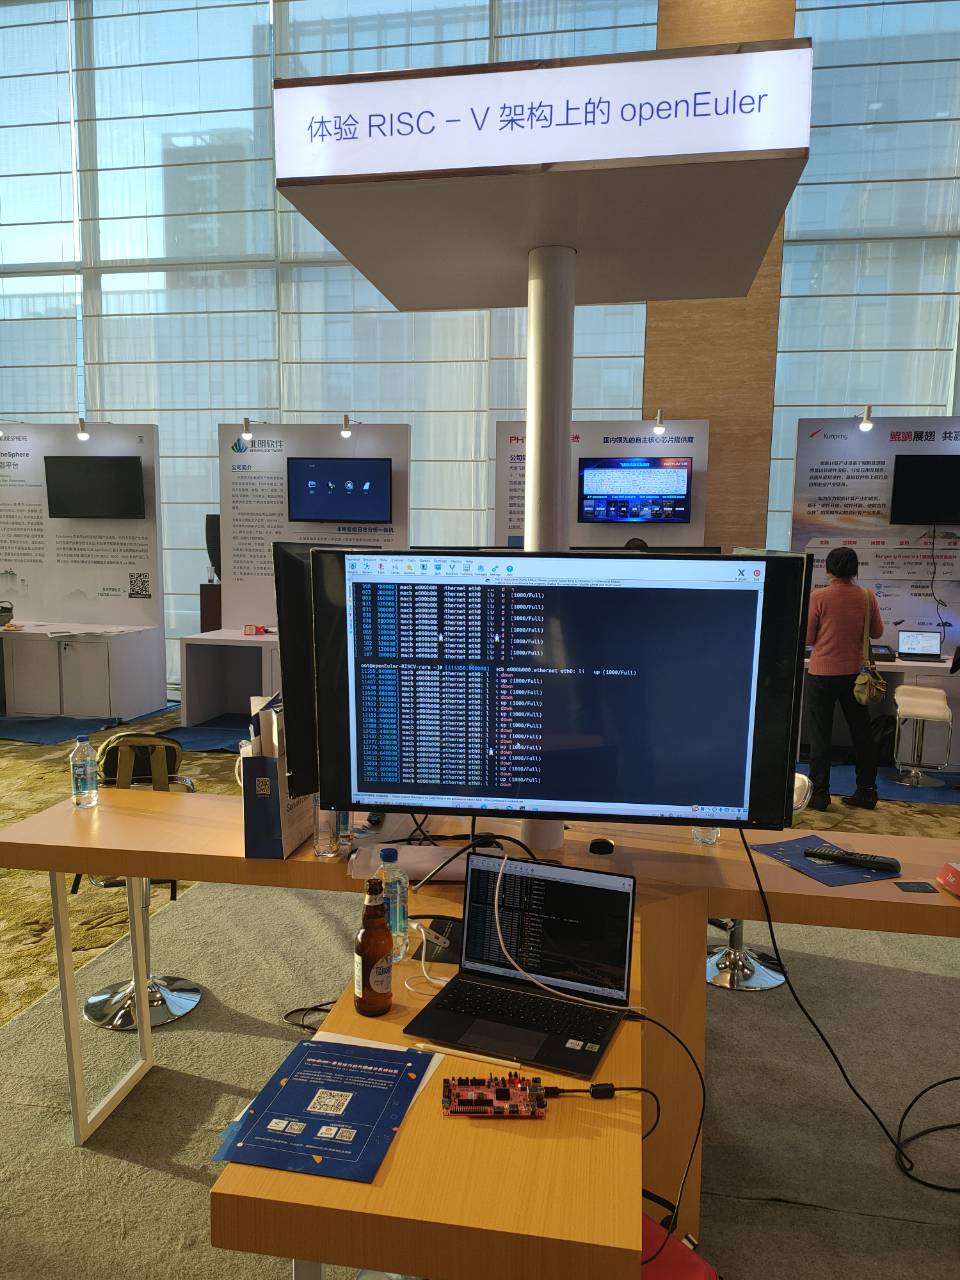 openEuler summit 上展示的运行在果壳芯片上的openEuler RISC-V 